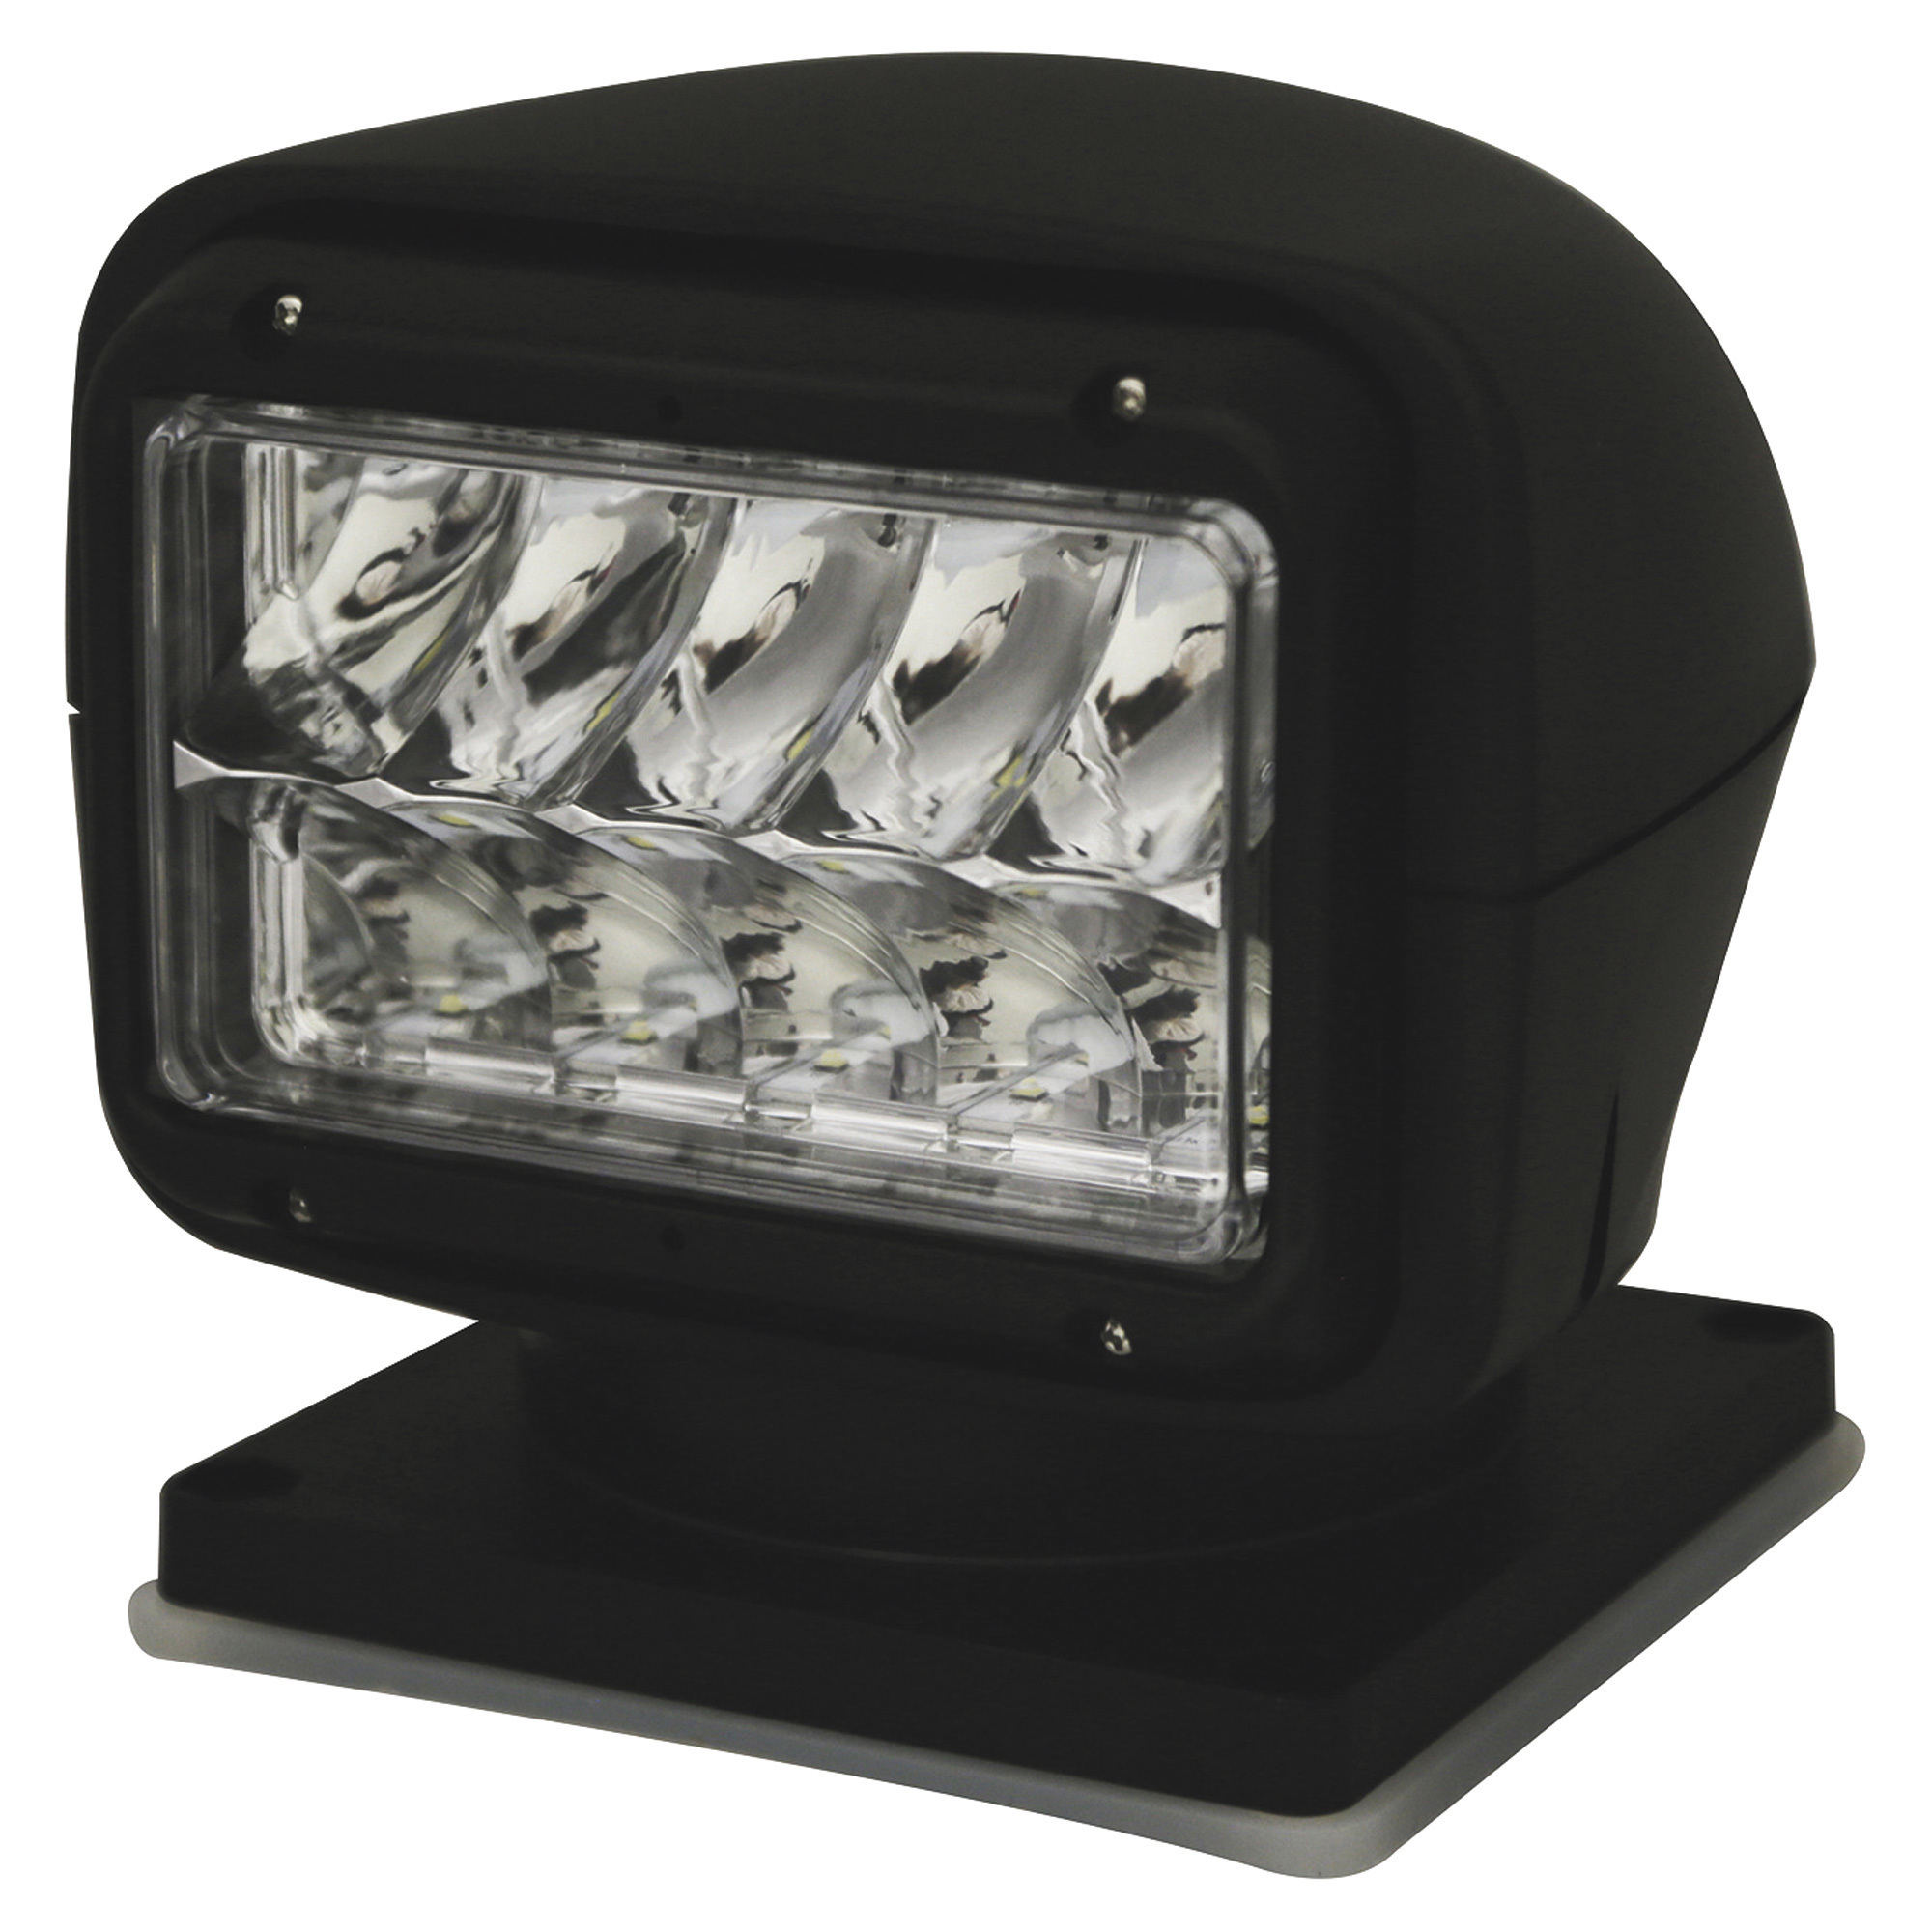 Ecco LED Spotlight with Wireless Remote Control â 5375 Lumens, 10 LEDs, Black, Model EW3010